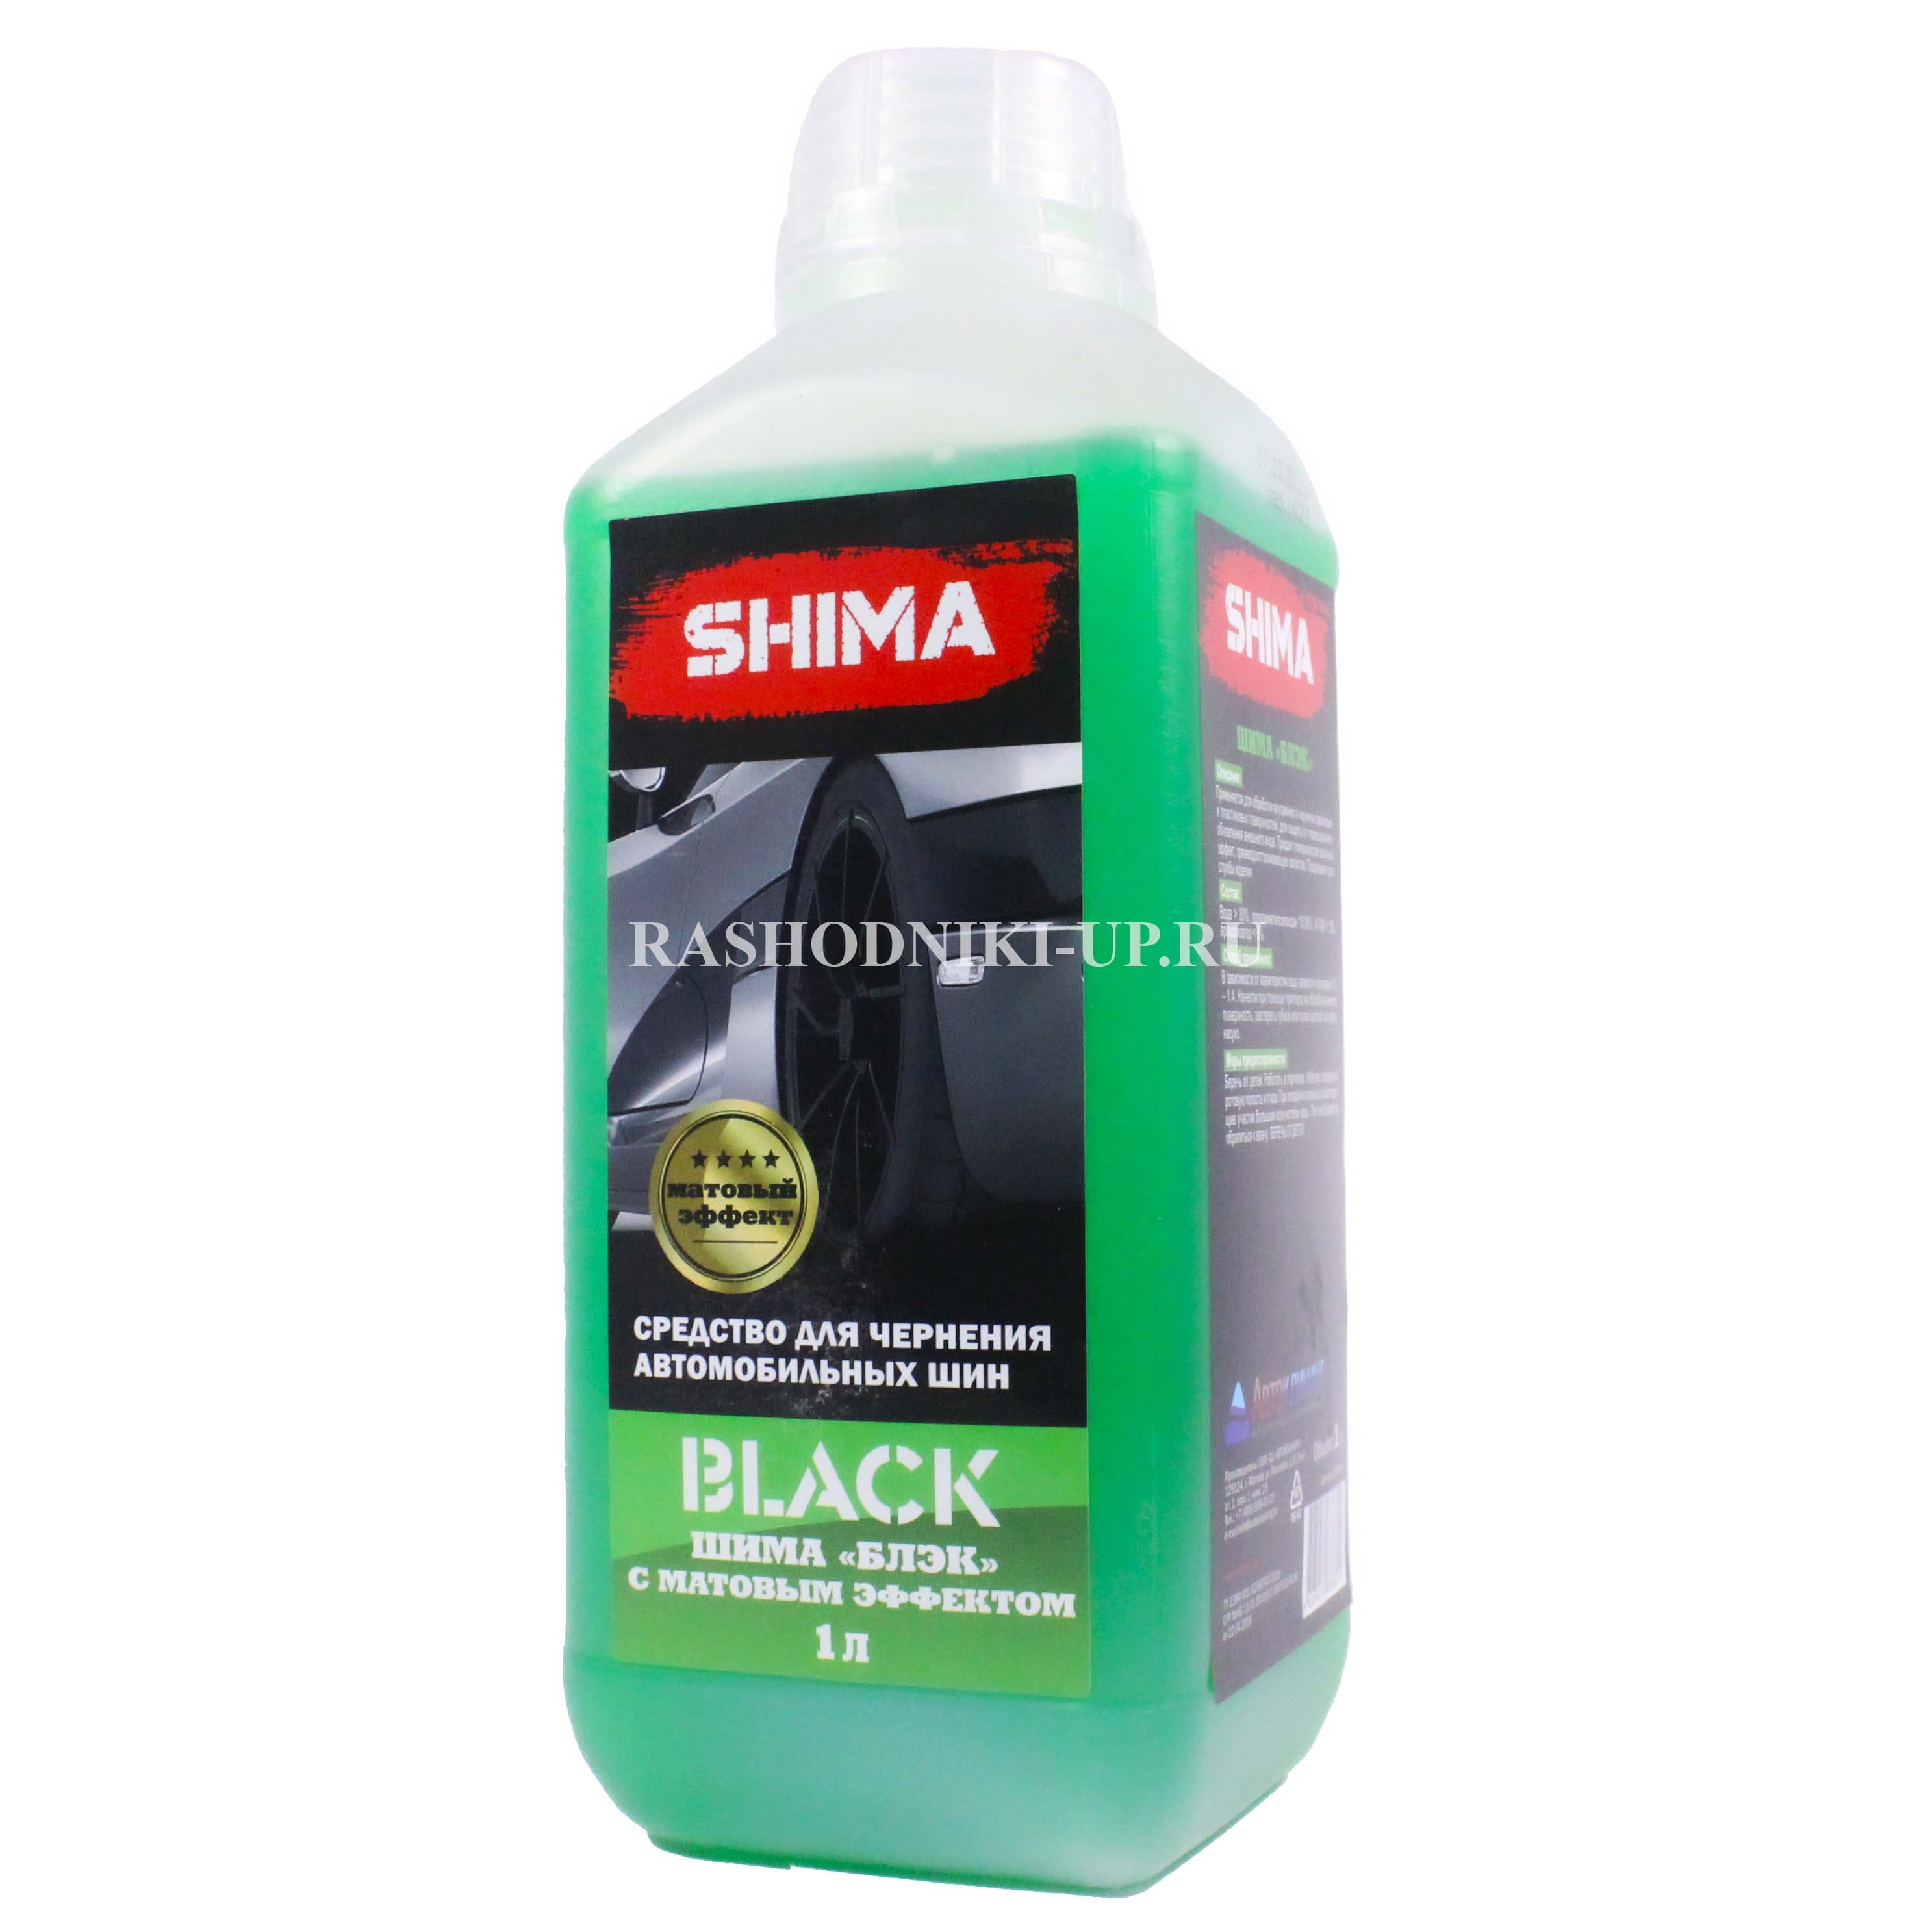 SHIMA BLACK Очиститель шин 1л